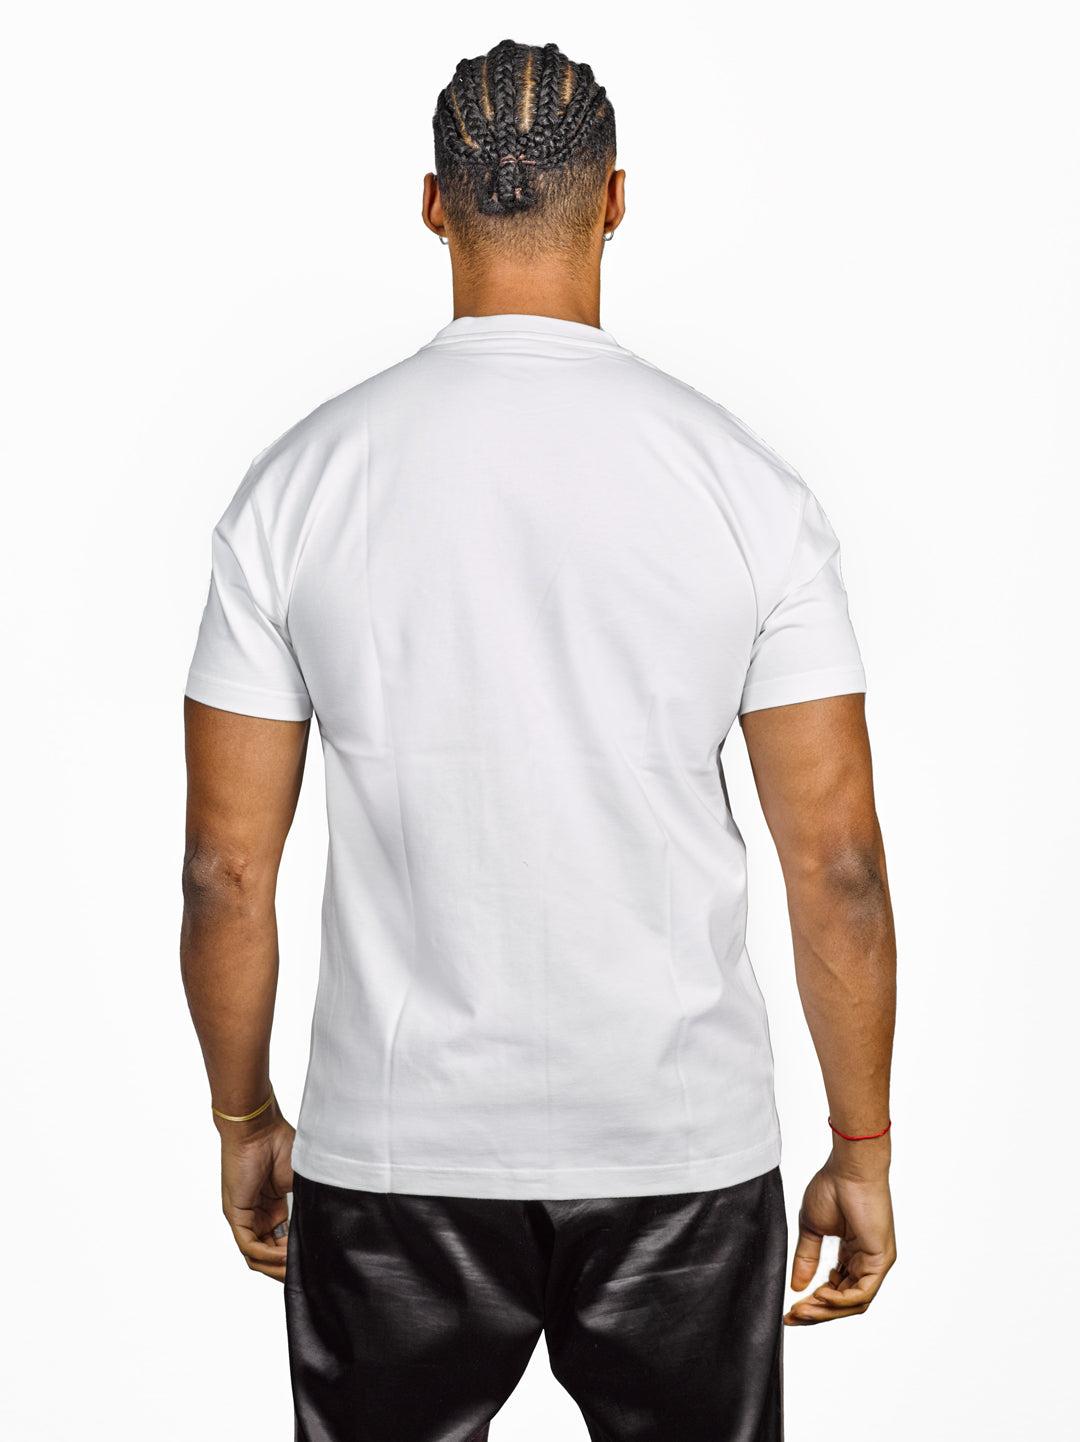 Exetees Regular Round Neck T-Shirt (White) - exetees.com